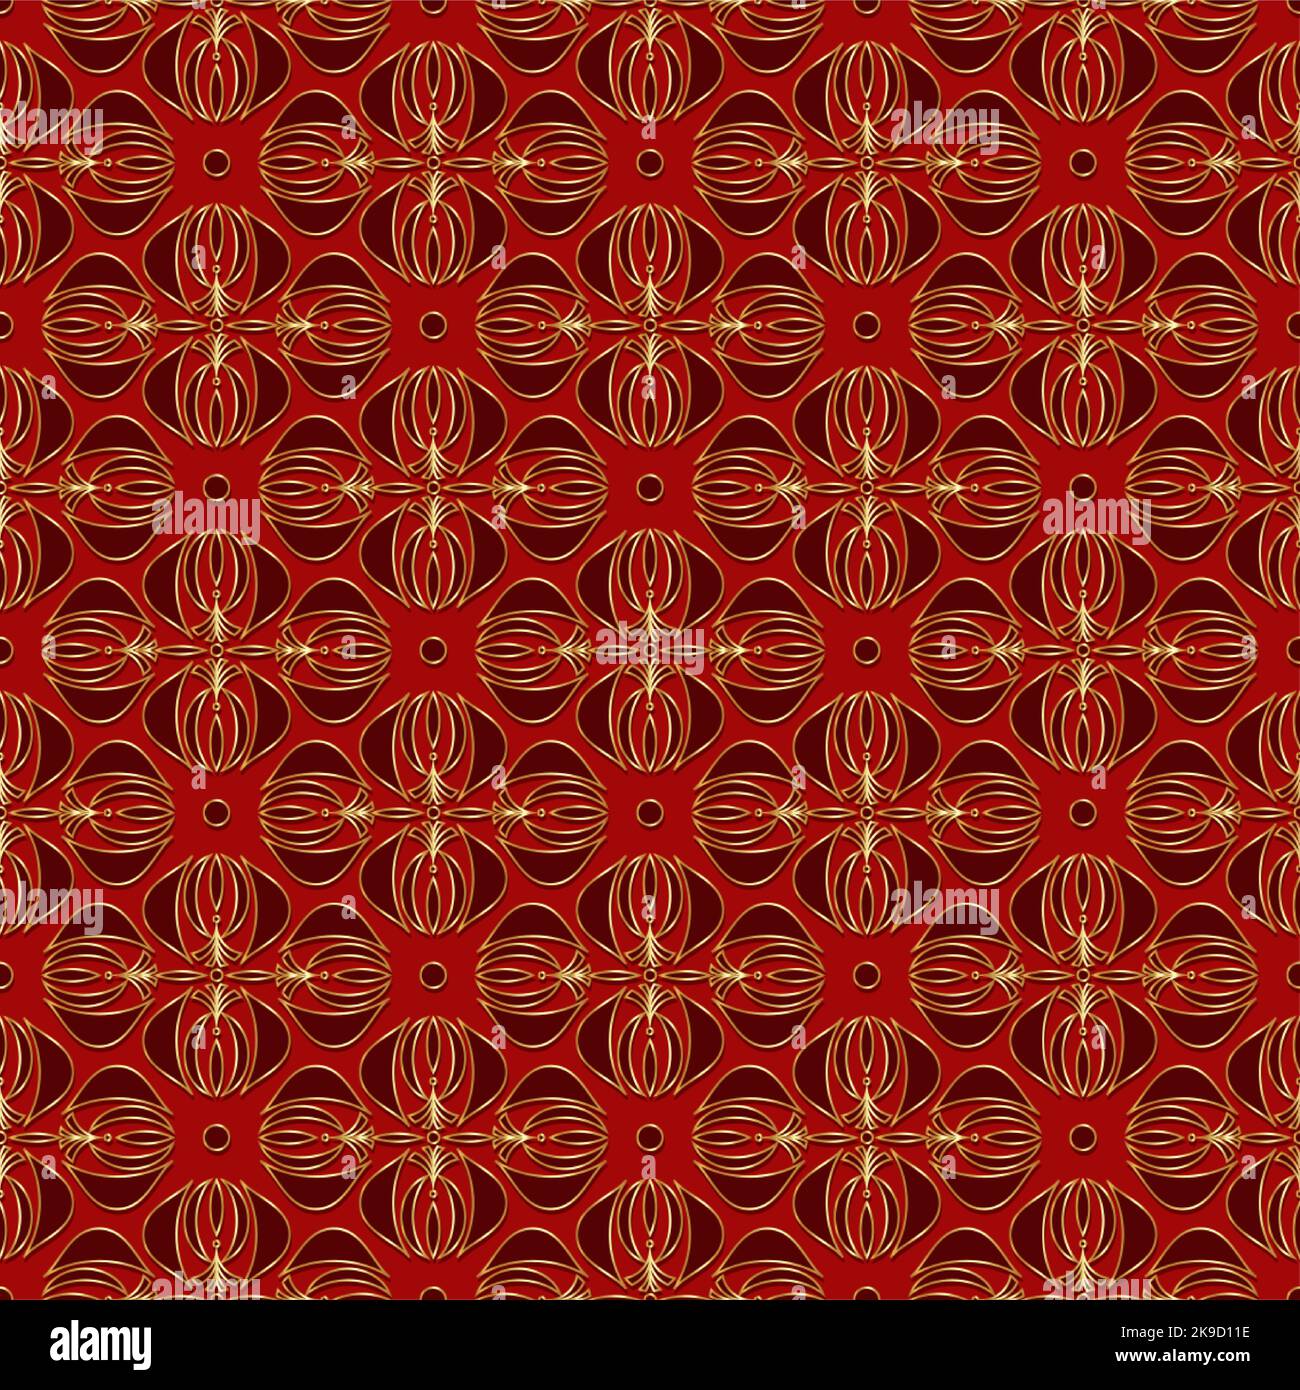 Seamless Art Nouveau Pattern. Vintage wallpaper Stock Photo by ©Freire  68332779